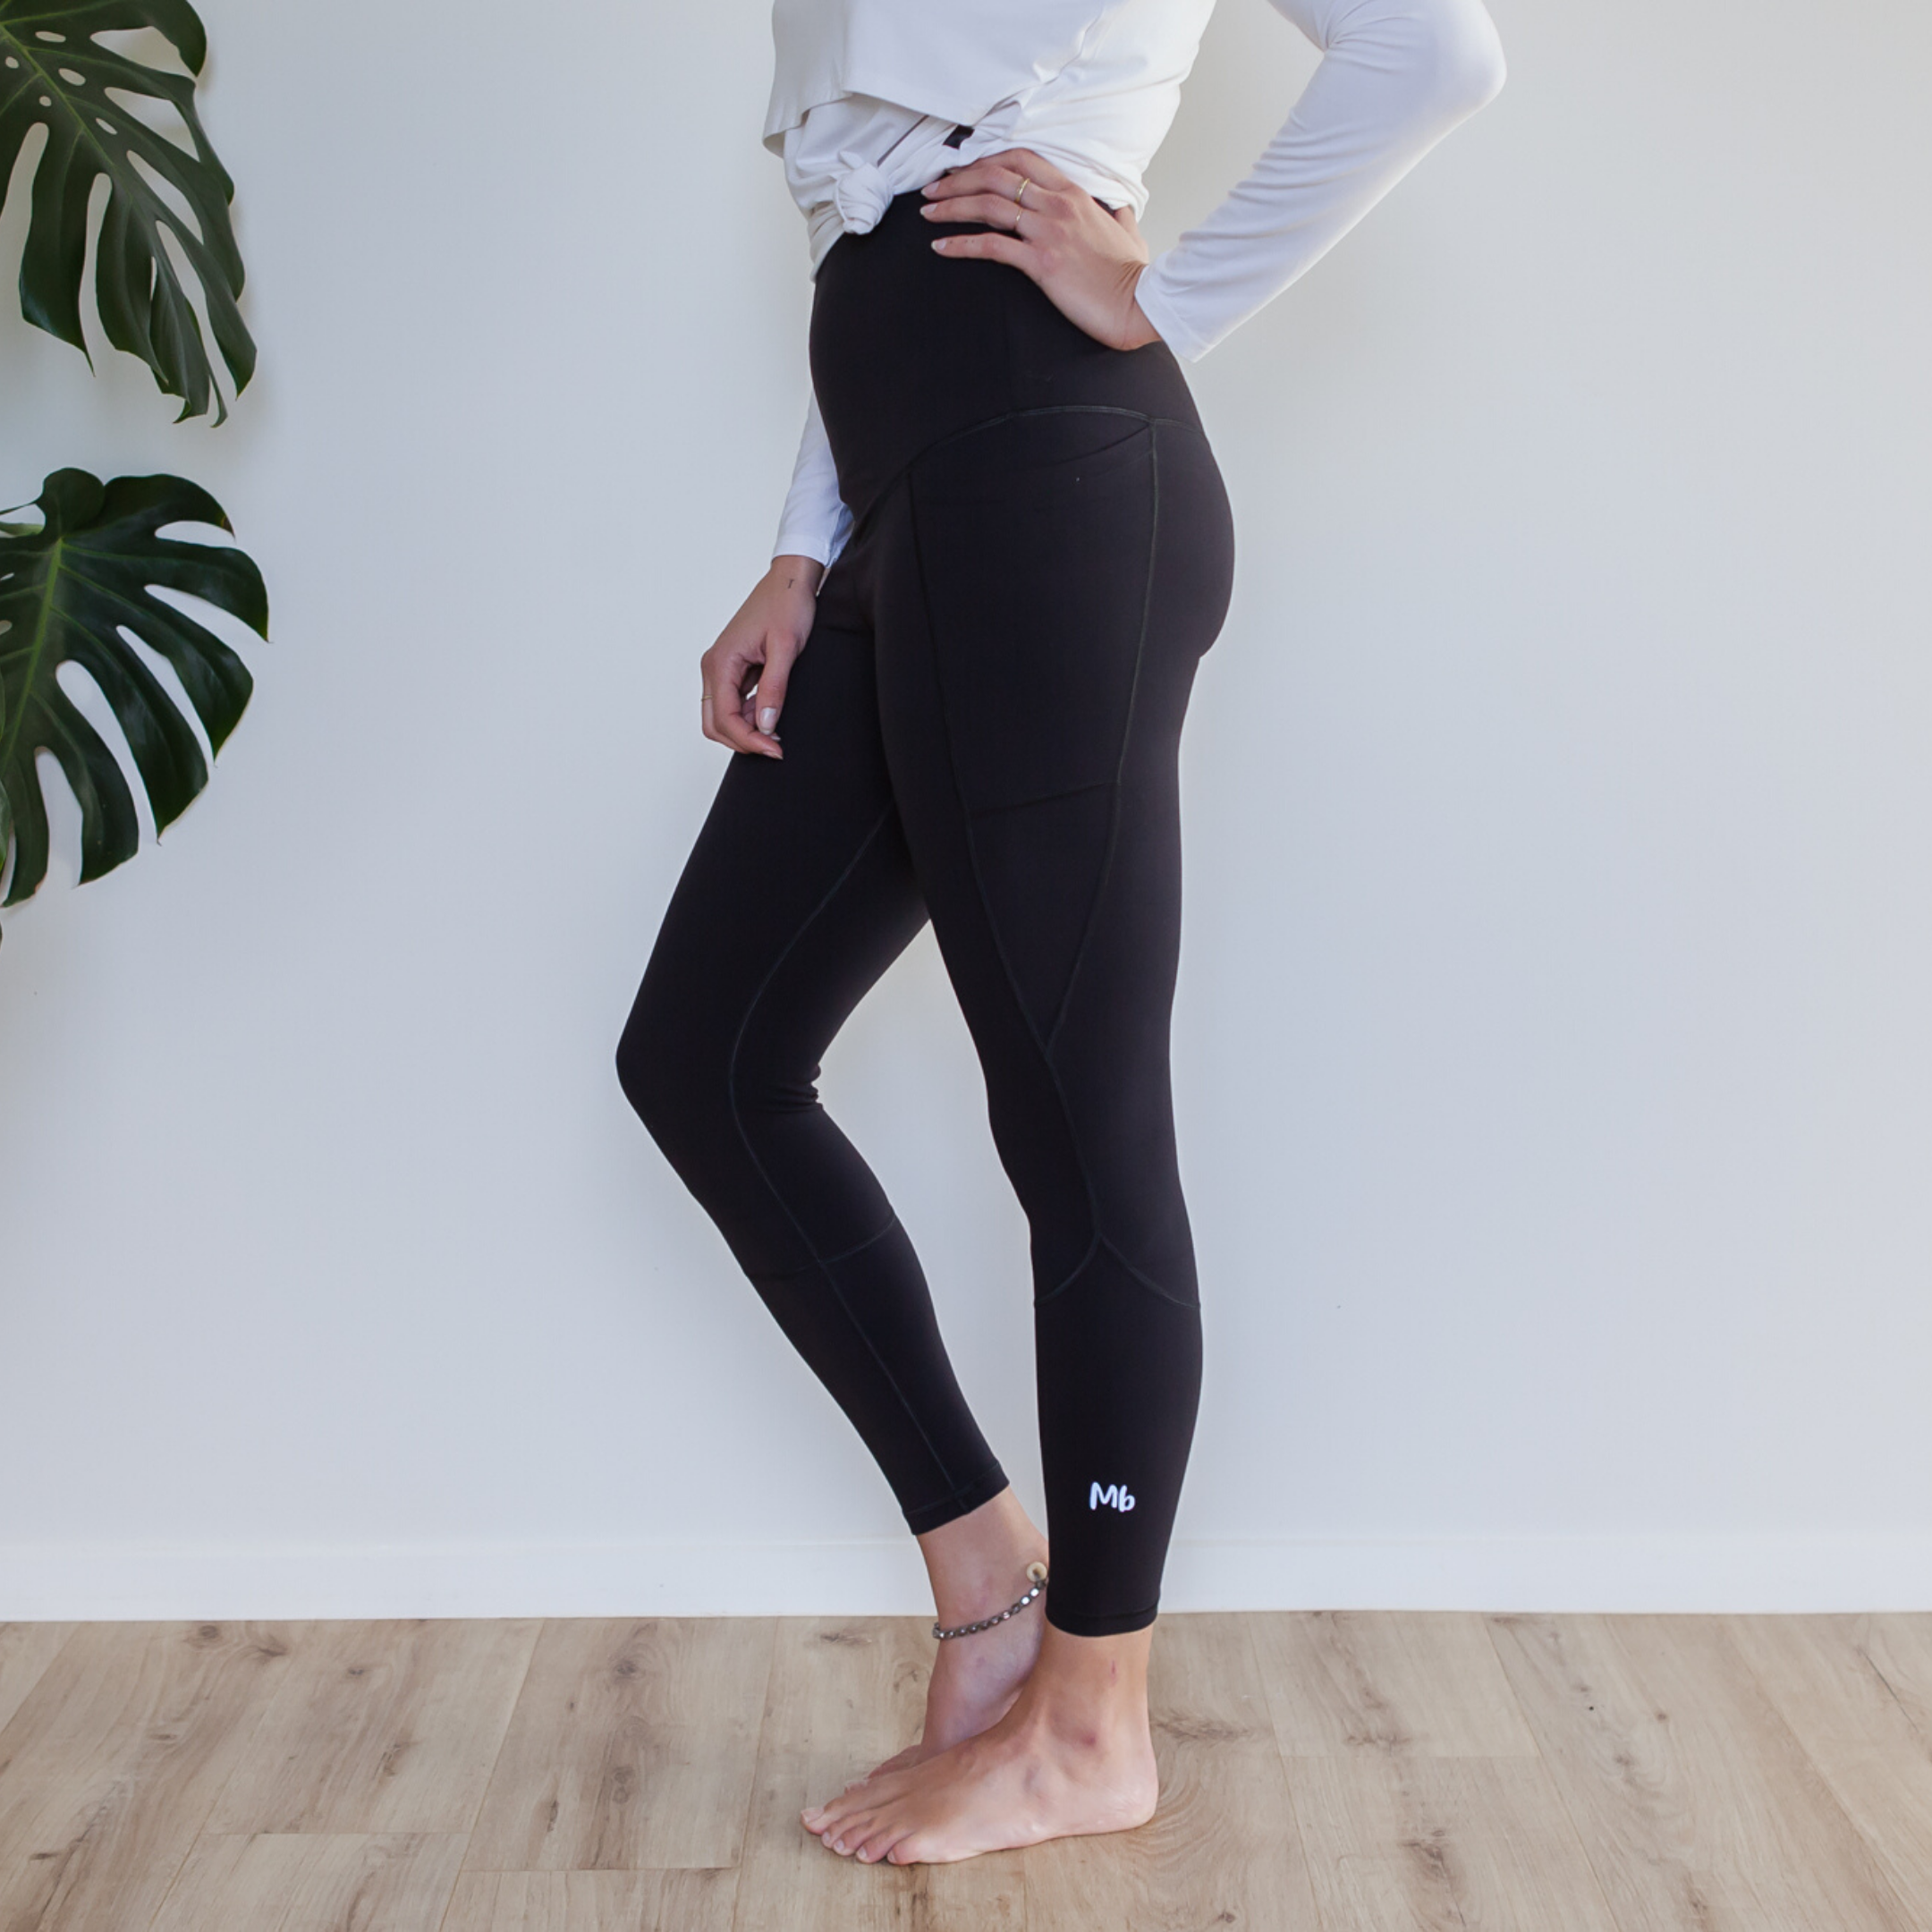 Milkbar Active Leggings Extra High Waist Full Length Black, 49% OFF